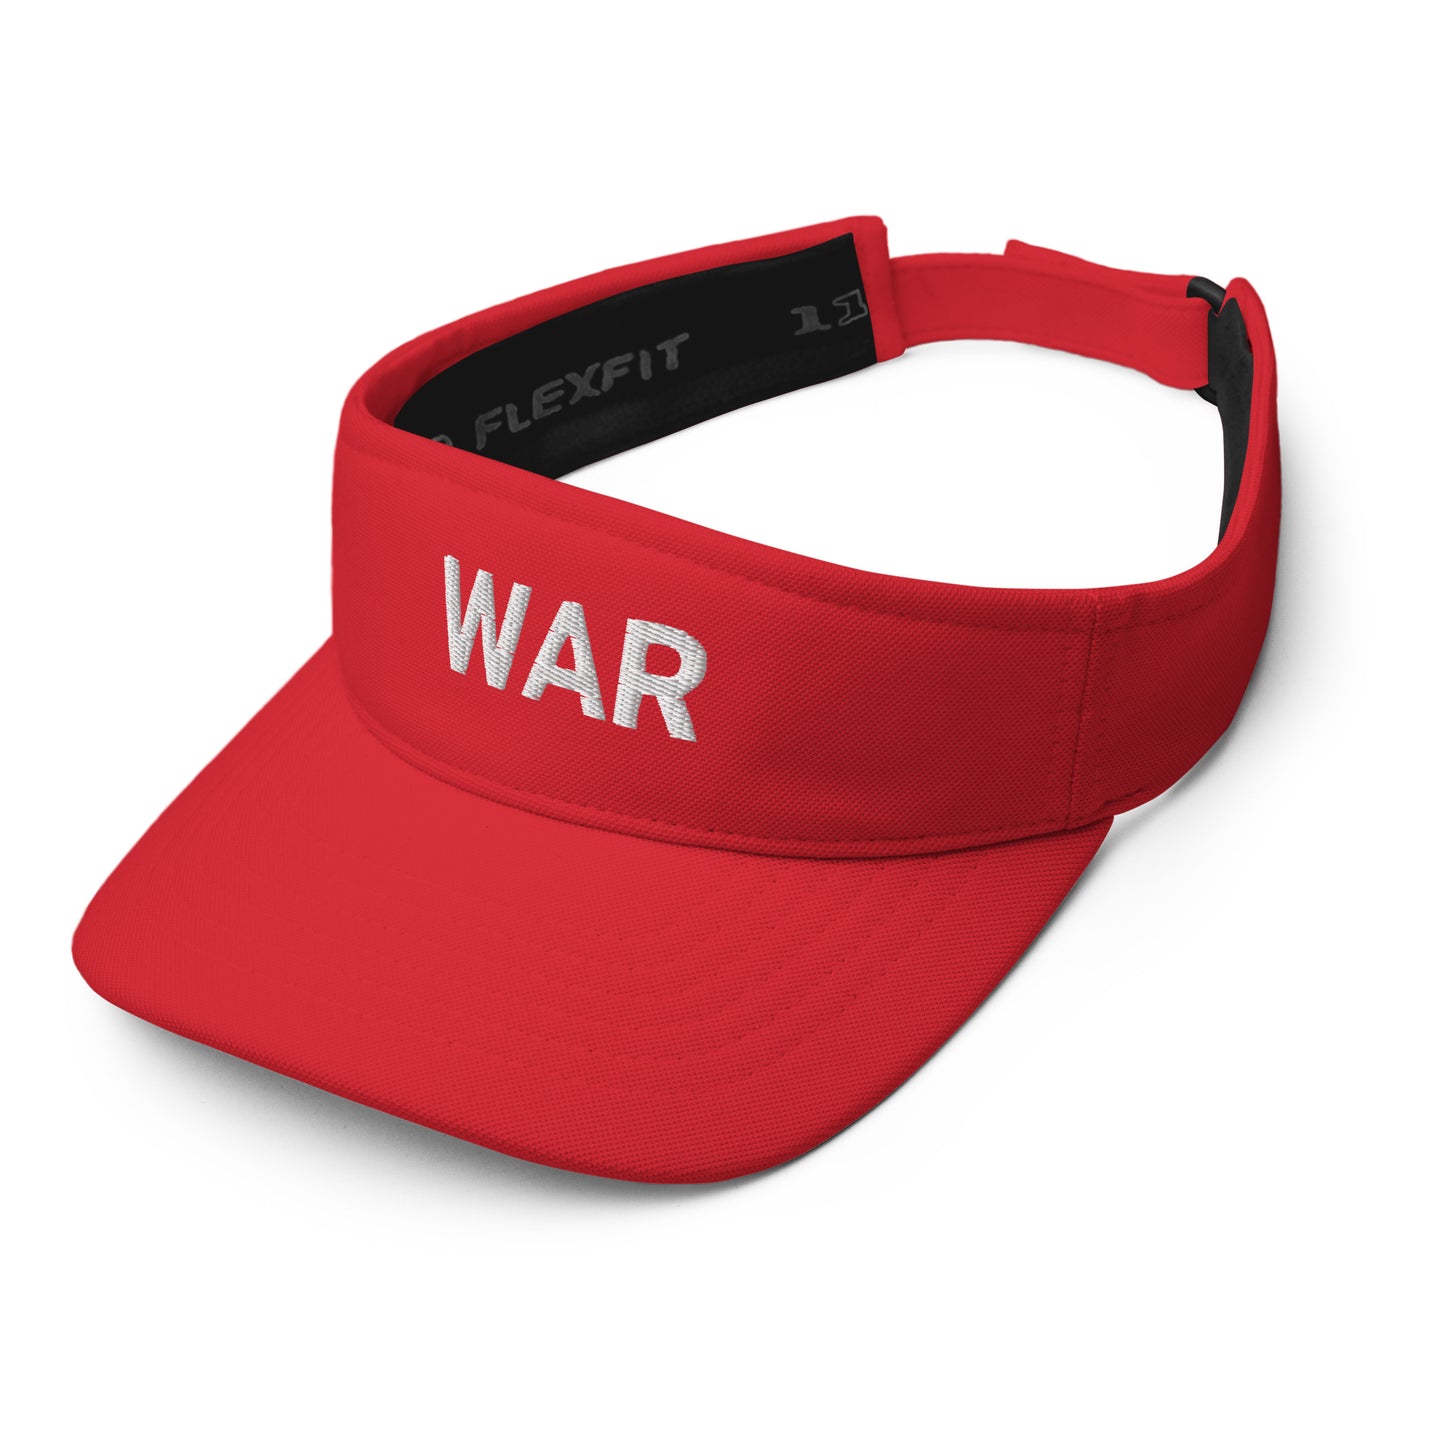 Marvin Hagler War hat / Dustin Poirier War Hat / War Visor